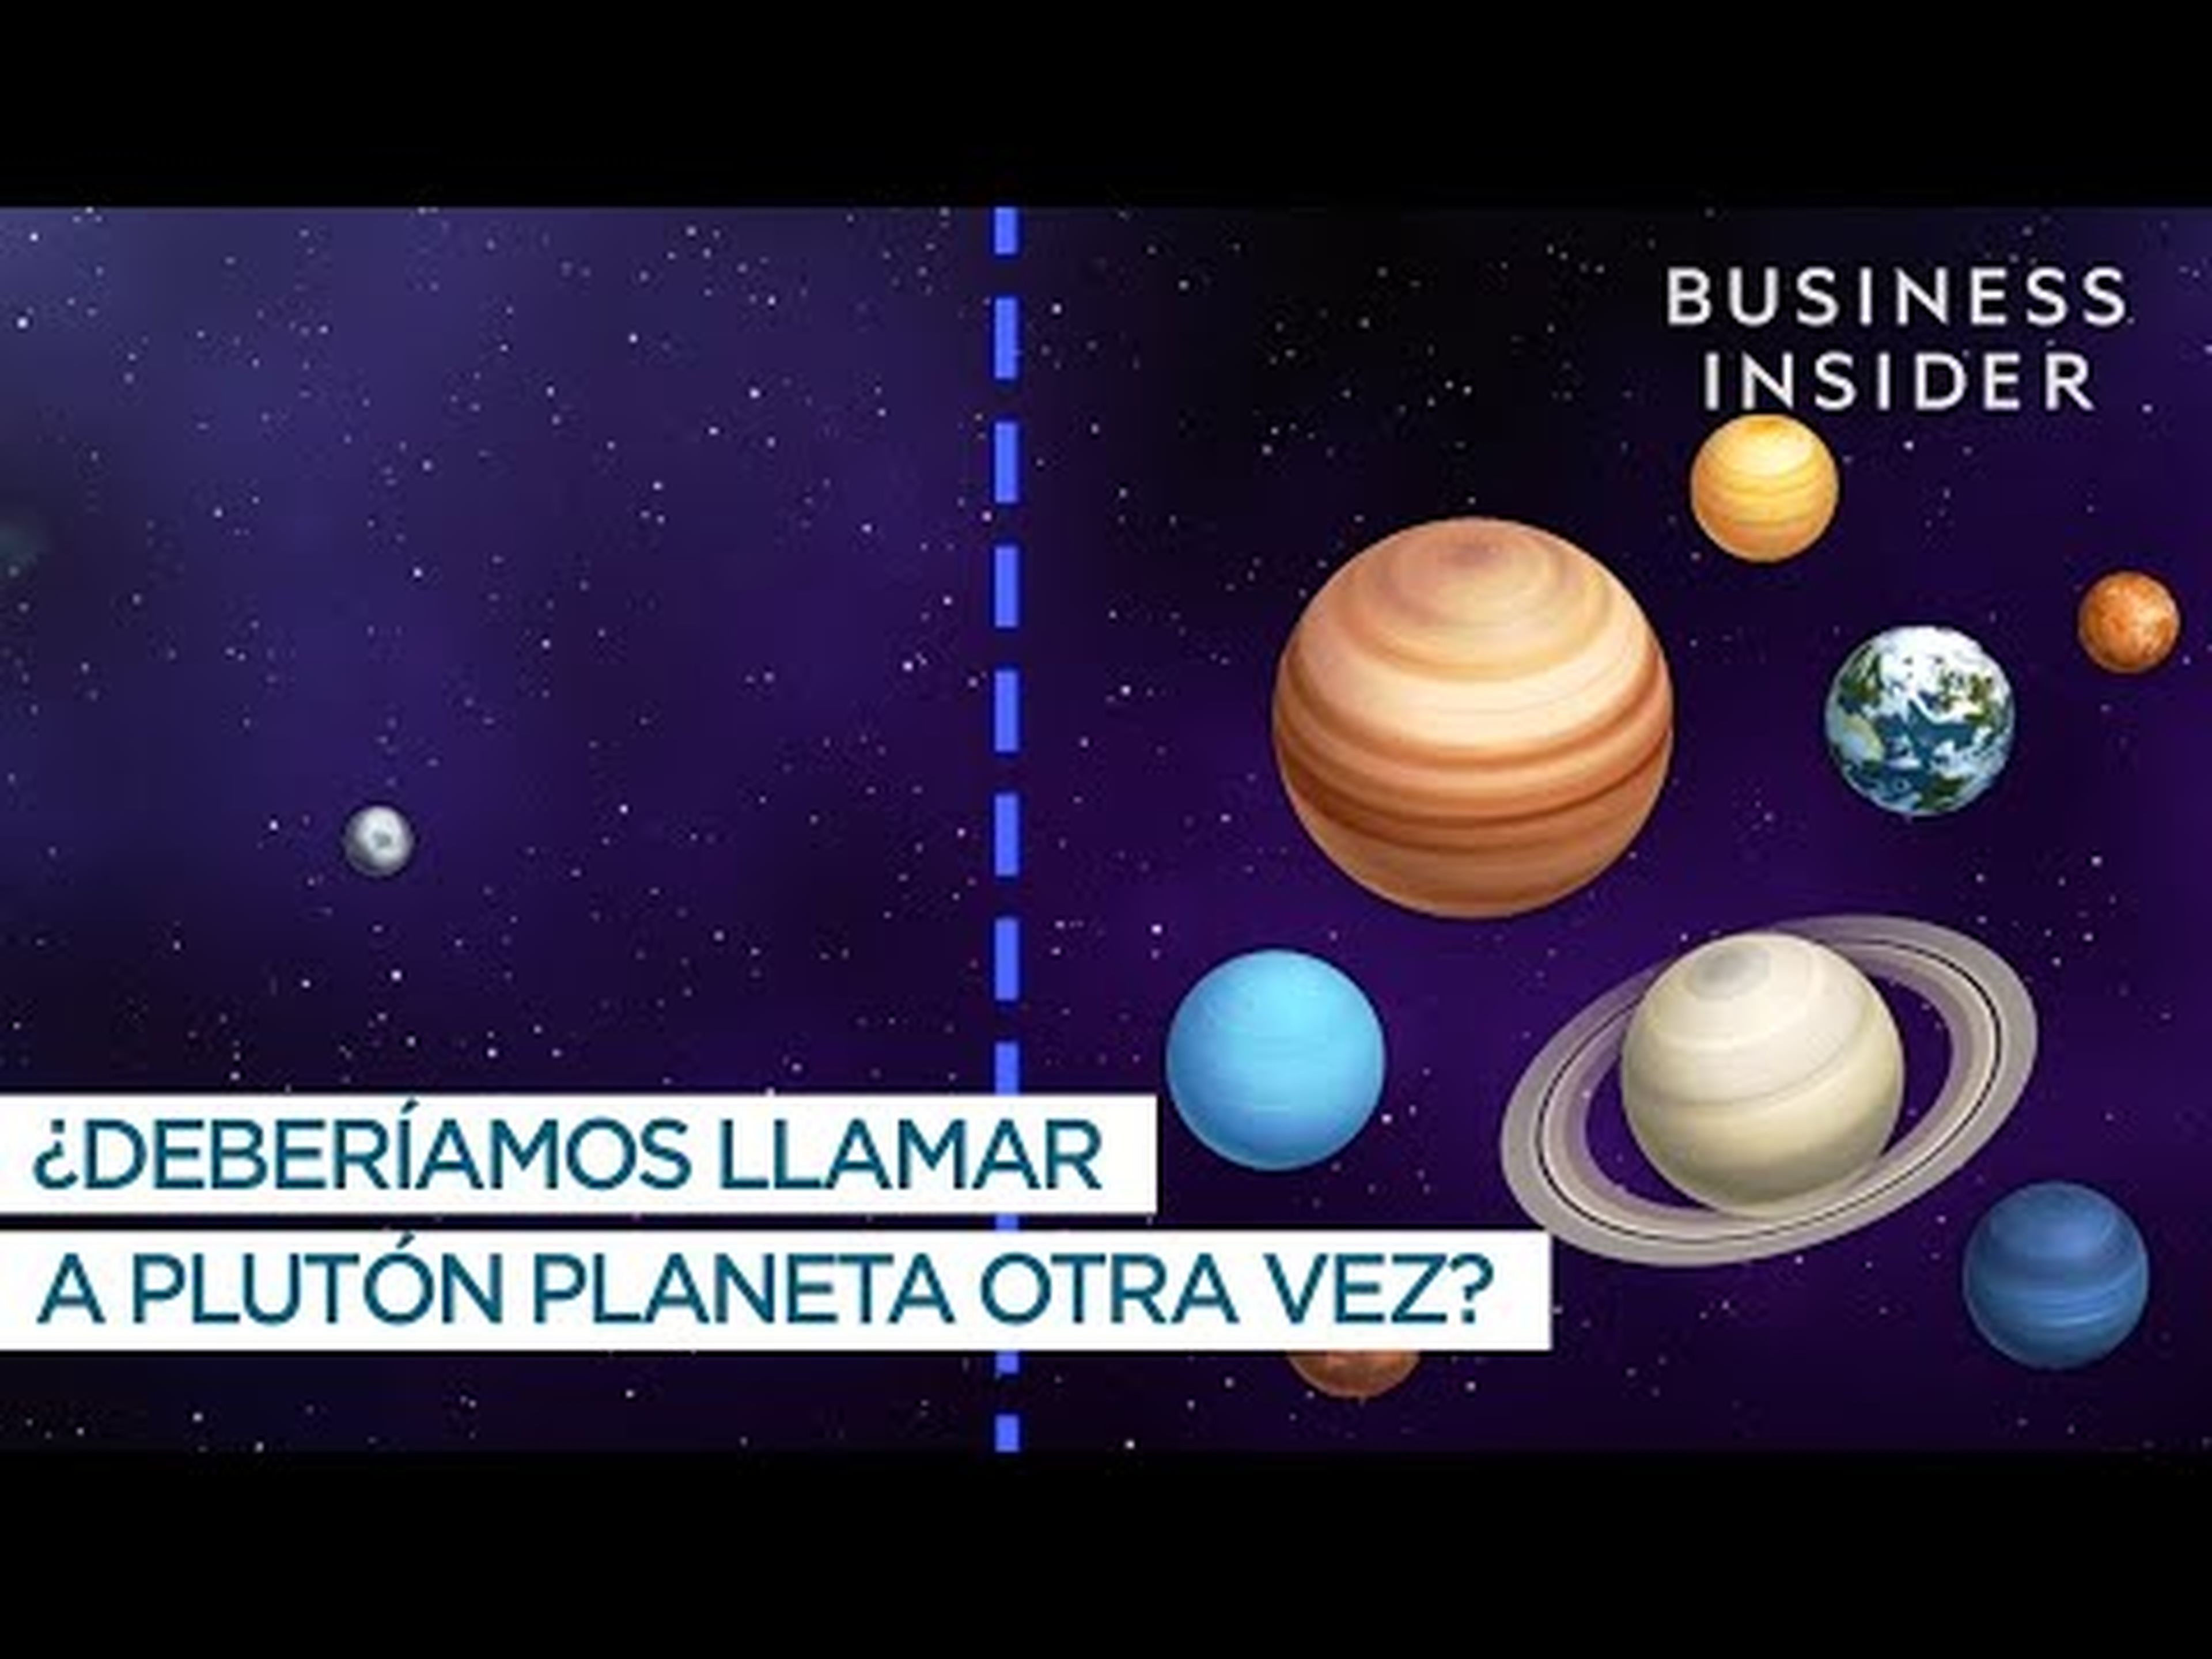 ¿Debería ser Plutón considerado un PLaneta otra vez?